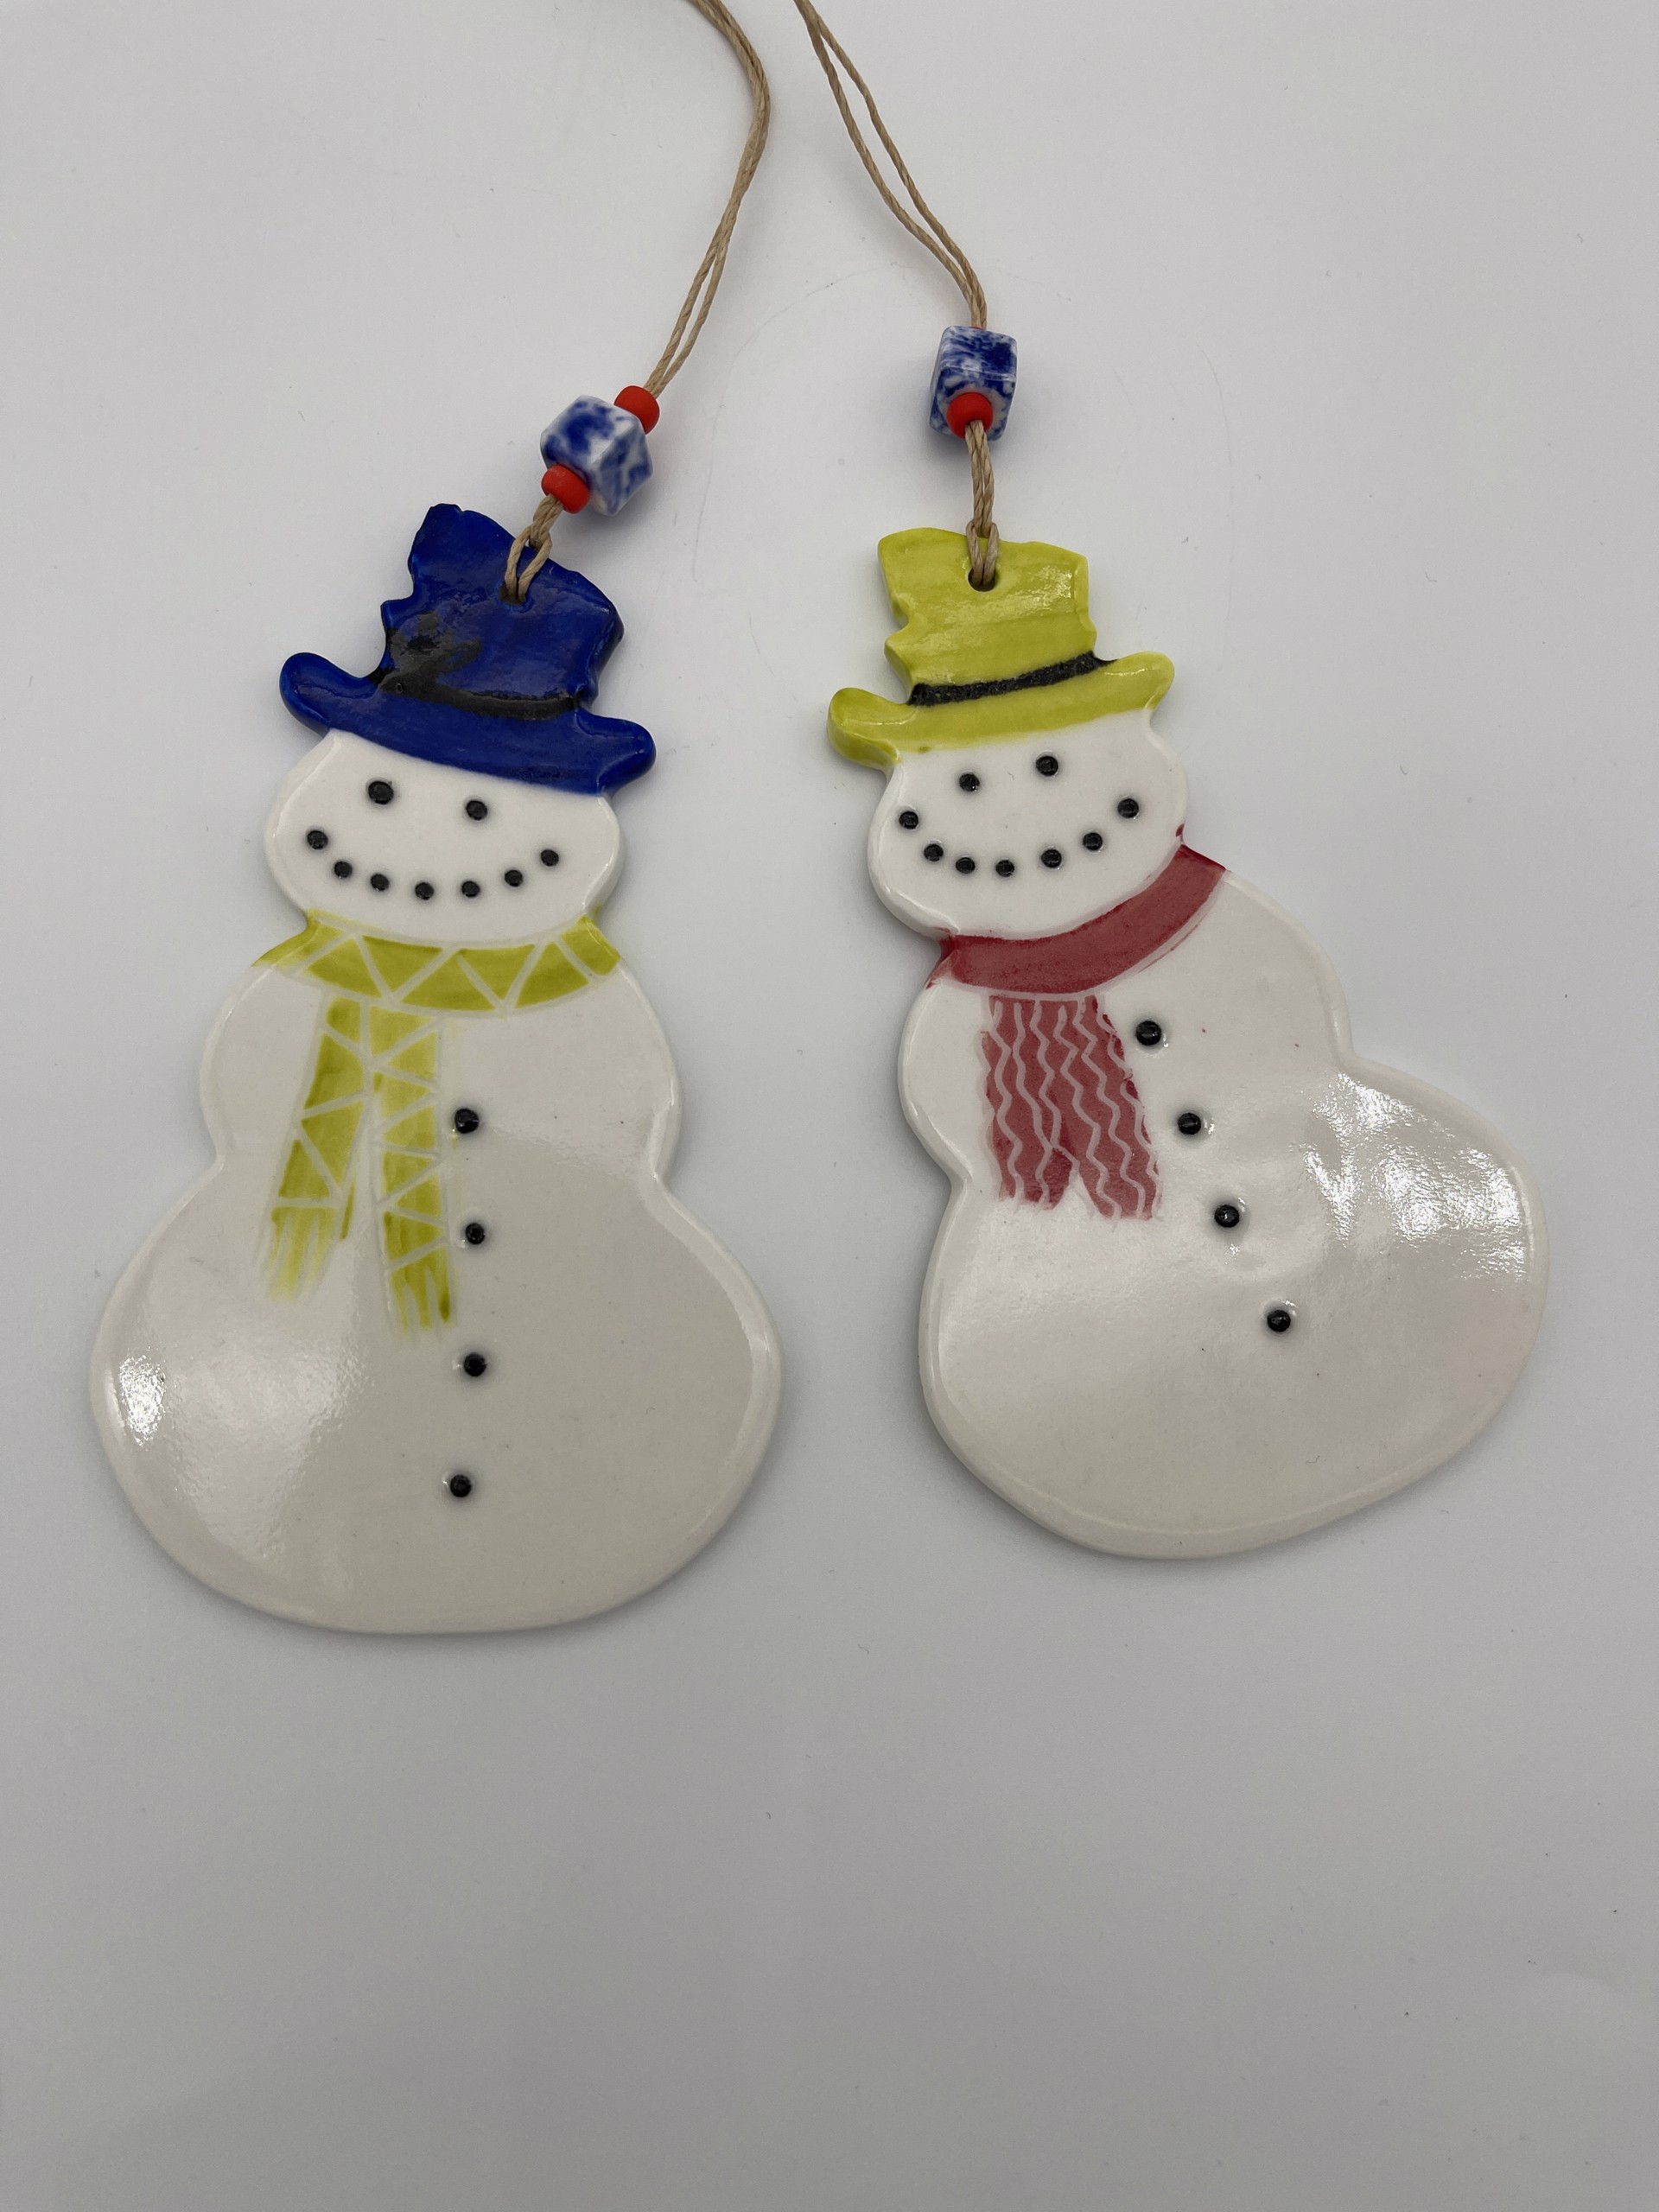 Snowman Ornaments by Karen Heathman